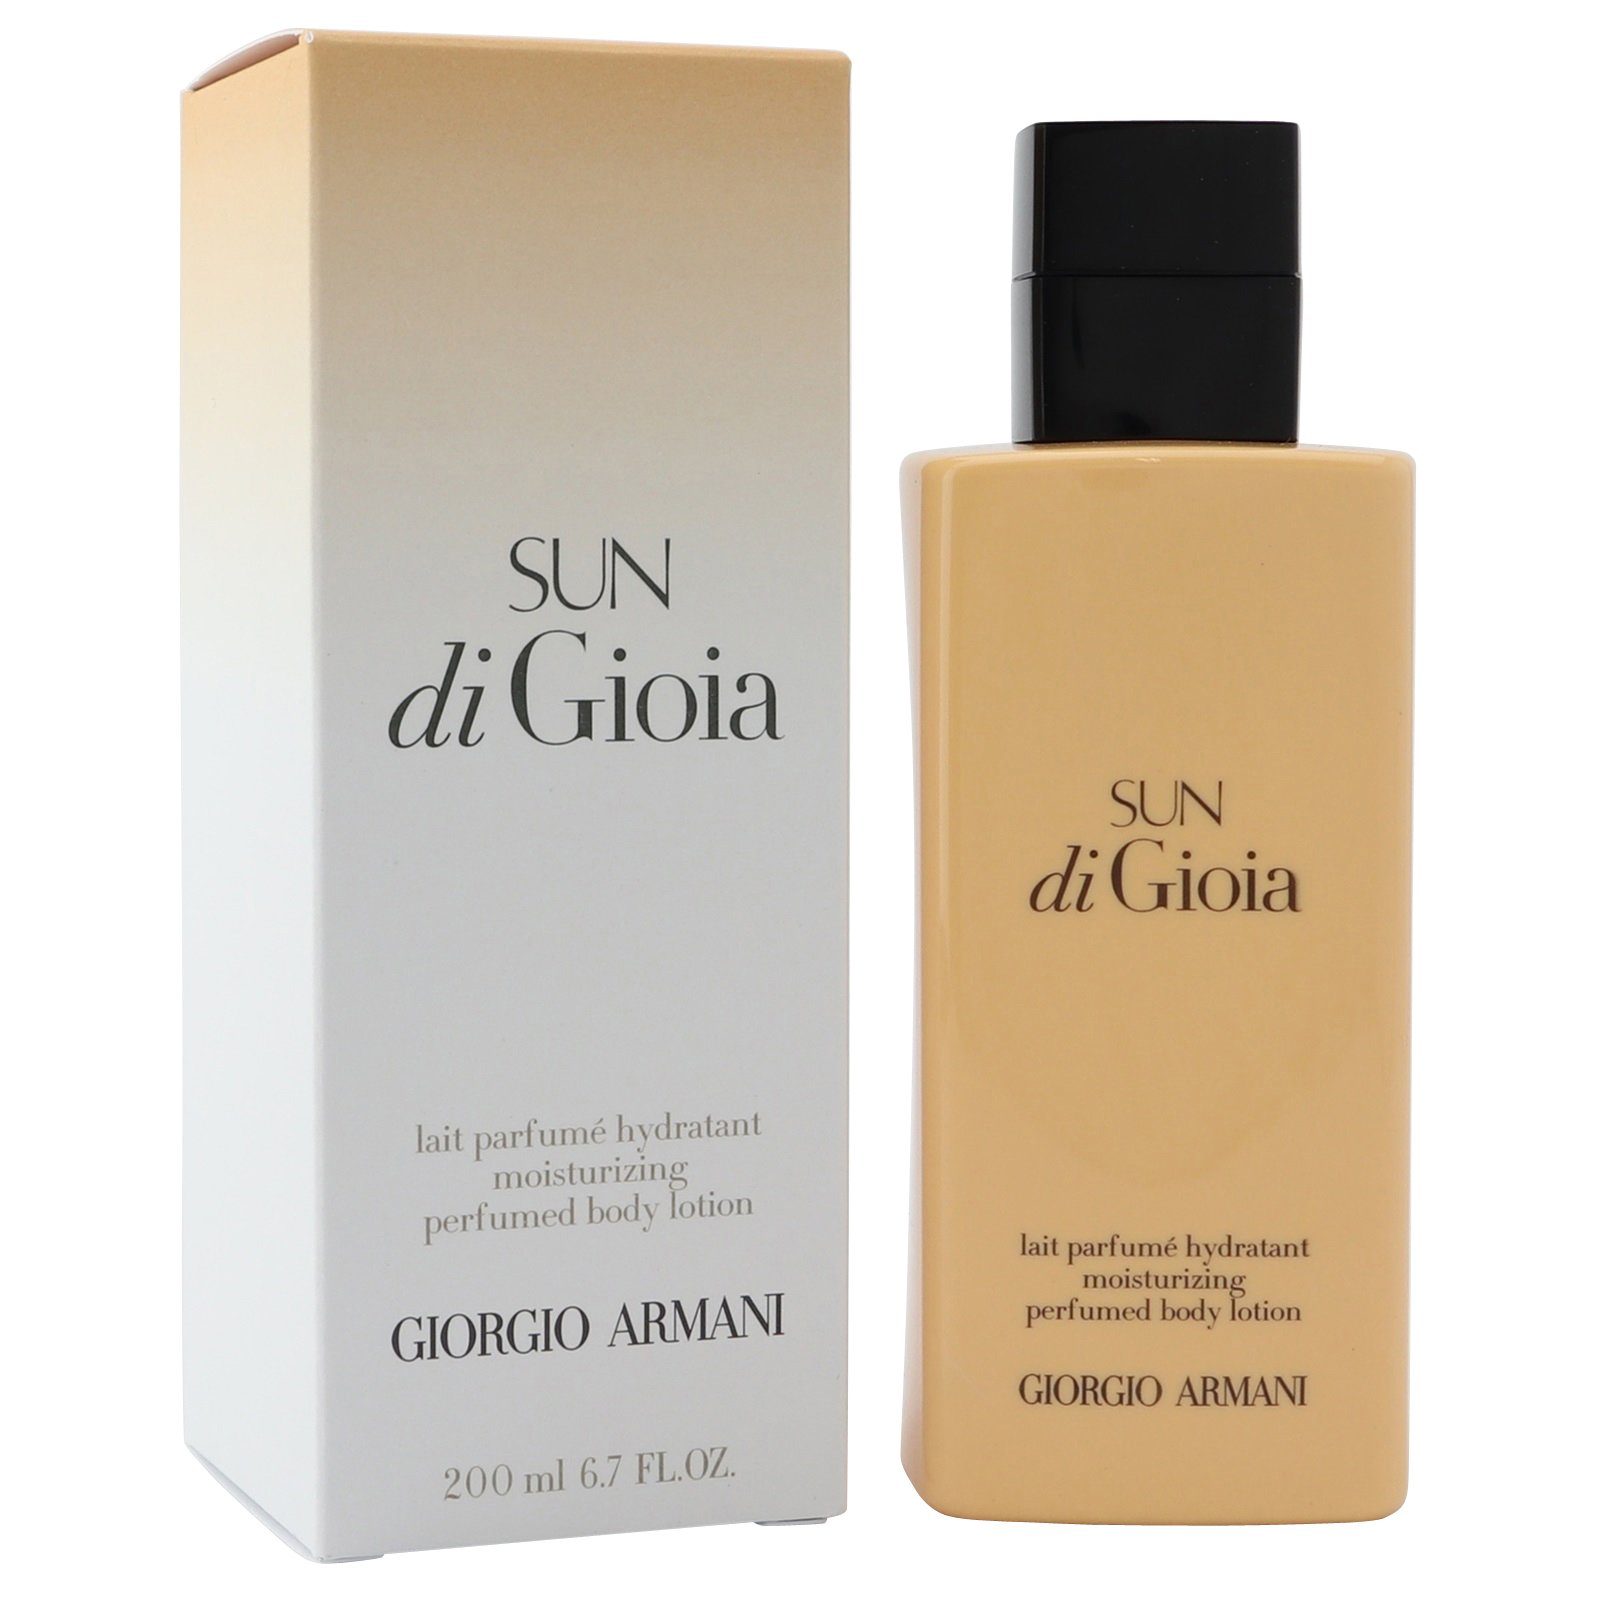 Giorgio Armani Körperlotion Giorgio Armani Sun di Gioia Perfumed Body Lotion  200 ml